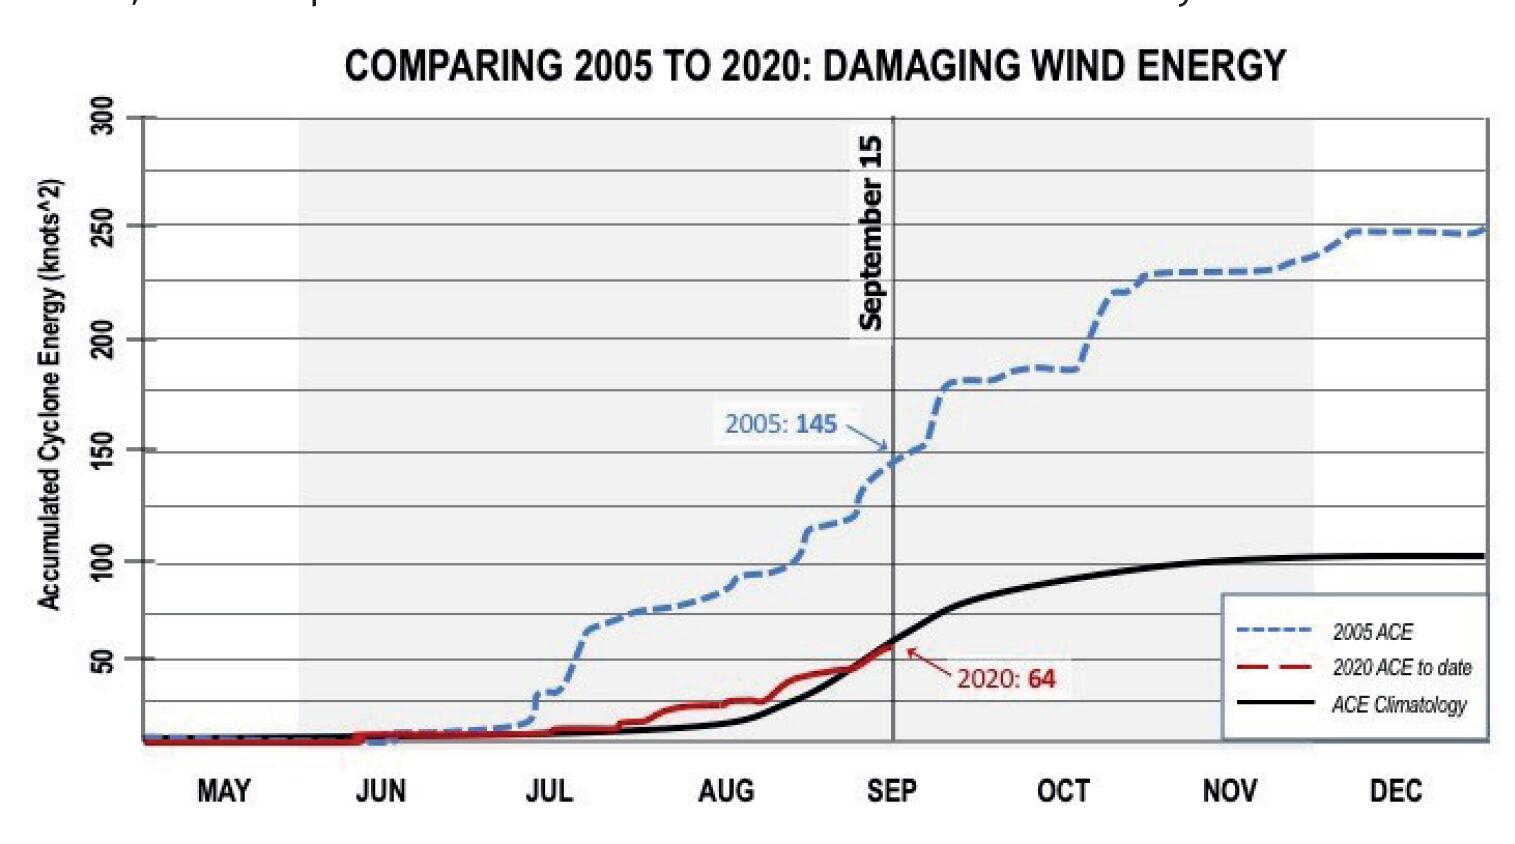 Damaging wind energy